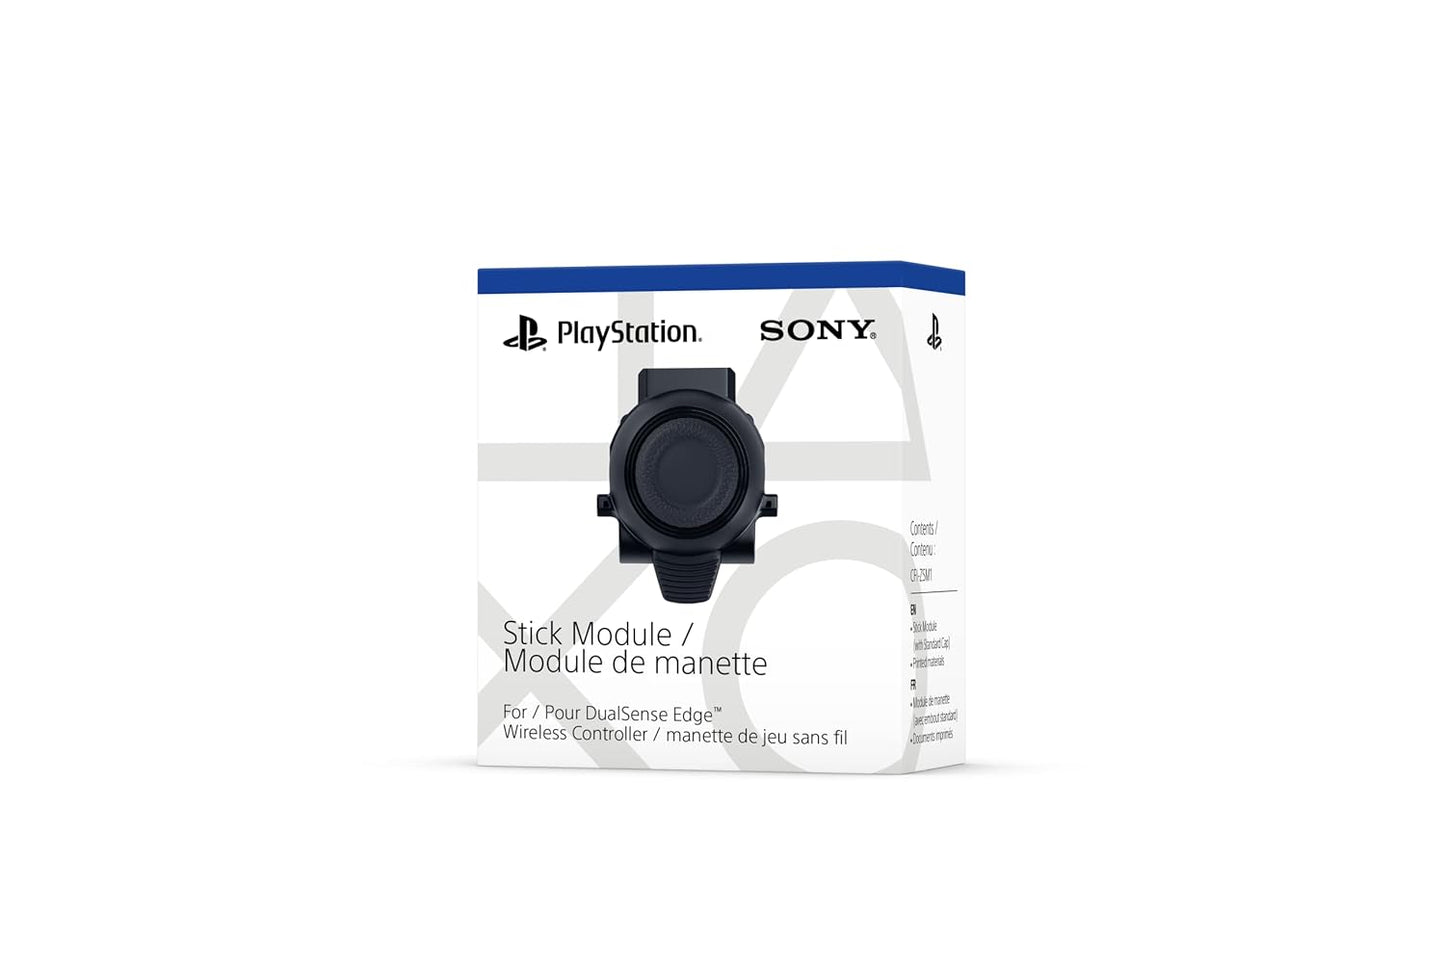 PlayStation DualSense Edge Stick Module